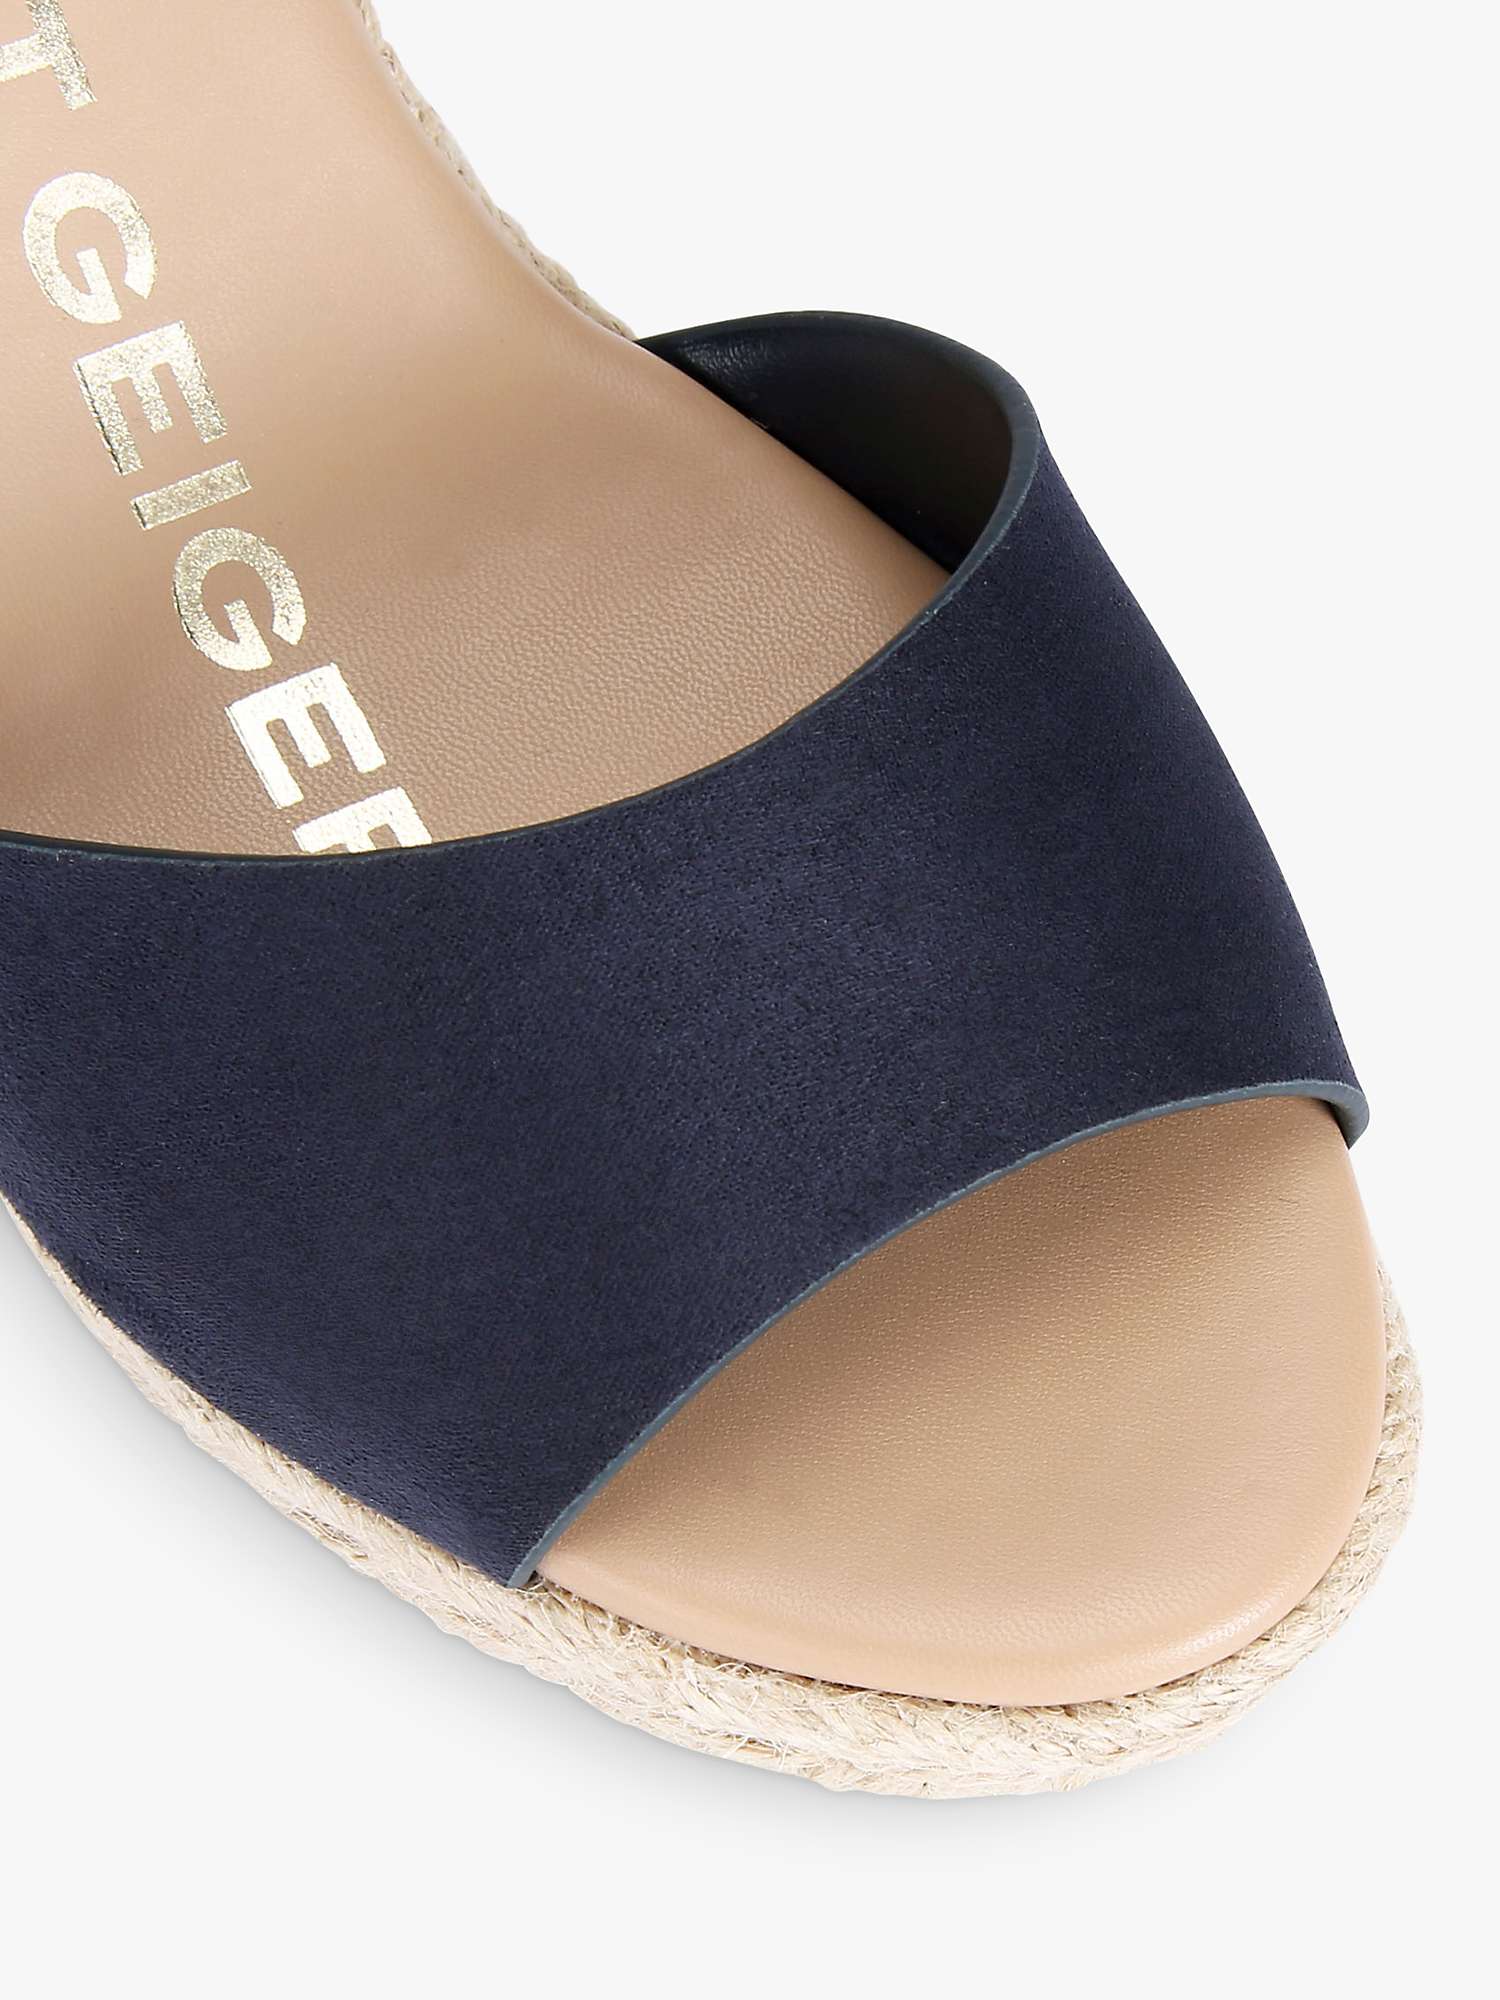 Buy KG Kurt Geiger Paisley 2 Wedge Heel Sandals, Blue Navy Online at johnlewis.com